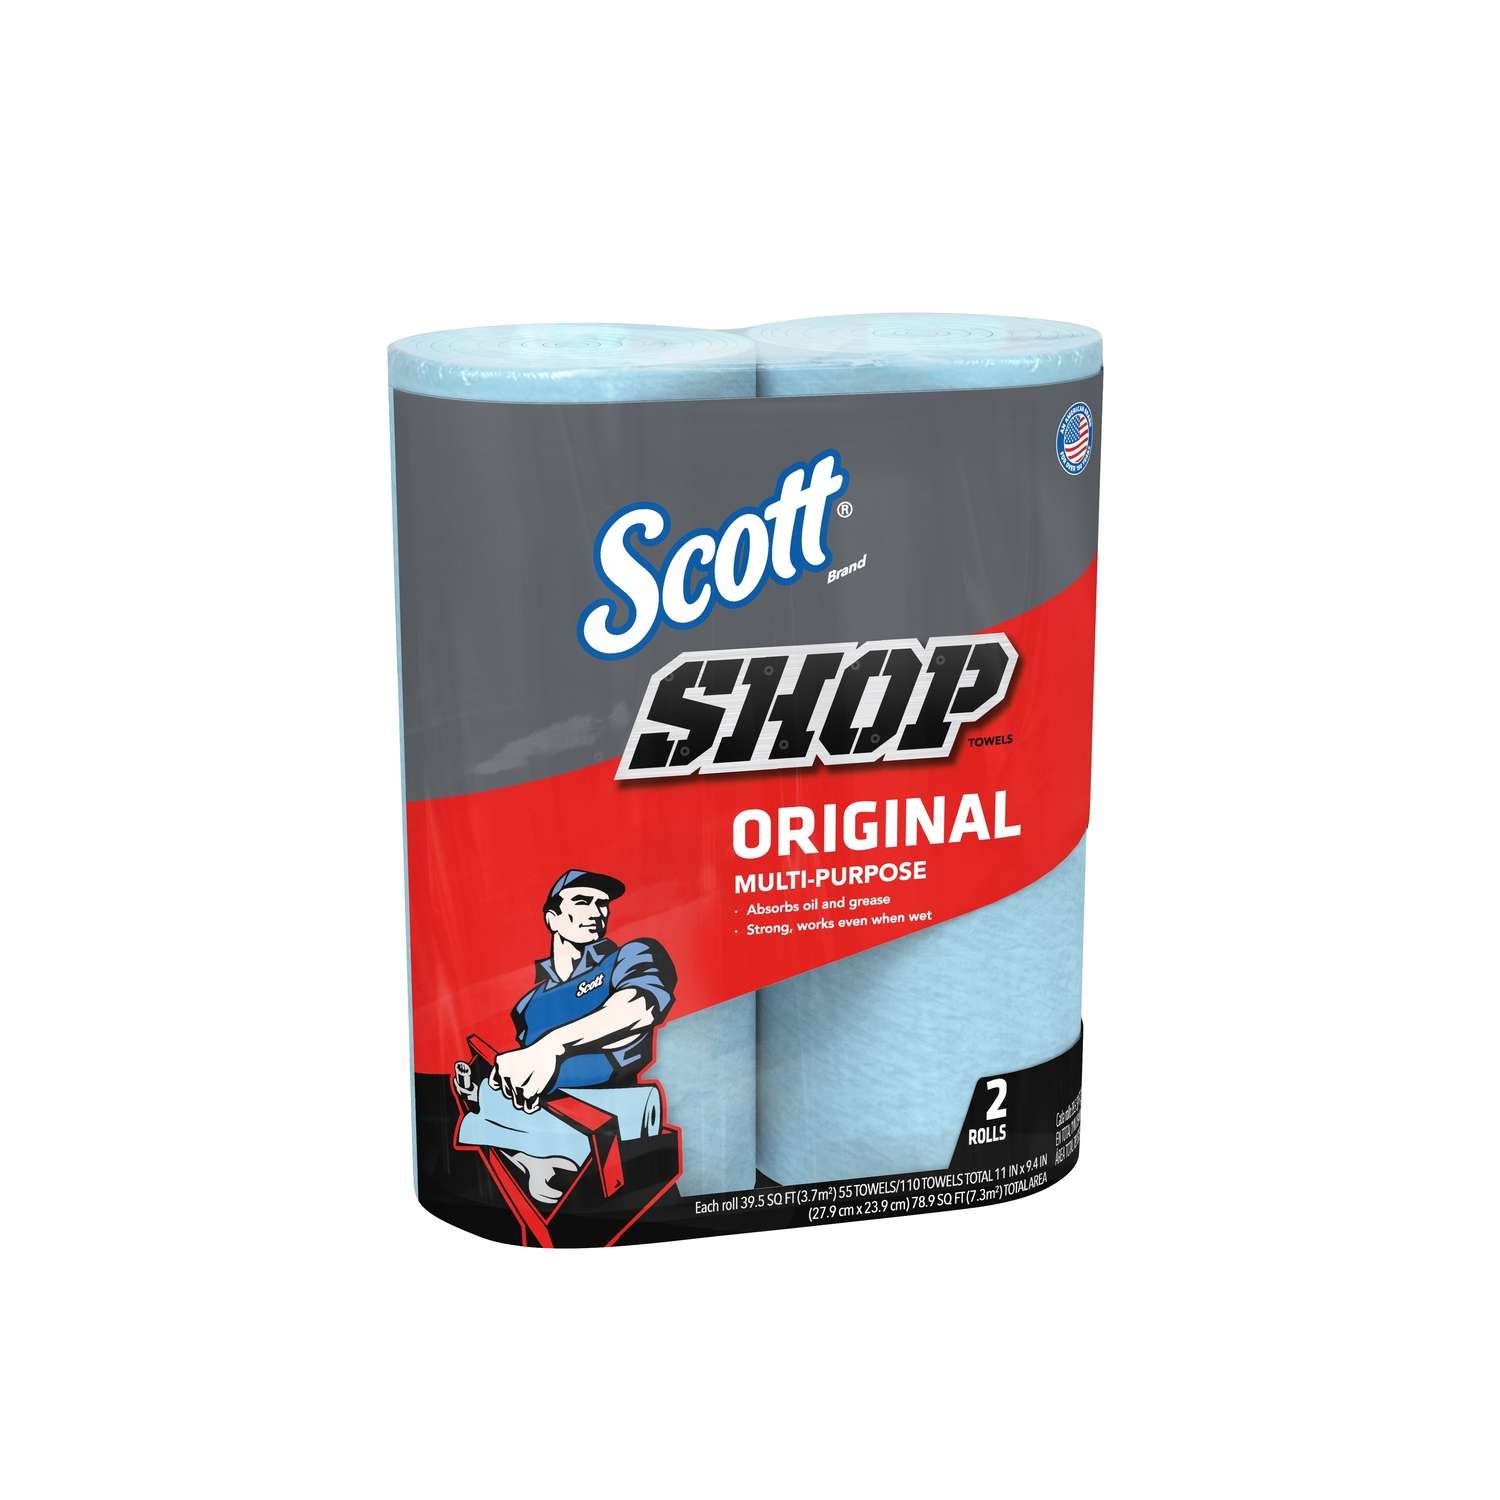 SCOTT Professional Multi Purpose Shop Paper TOWELS 4 Rolls 55 Sheets ROLL 4 ct 